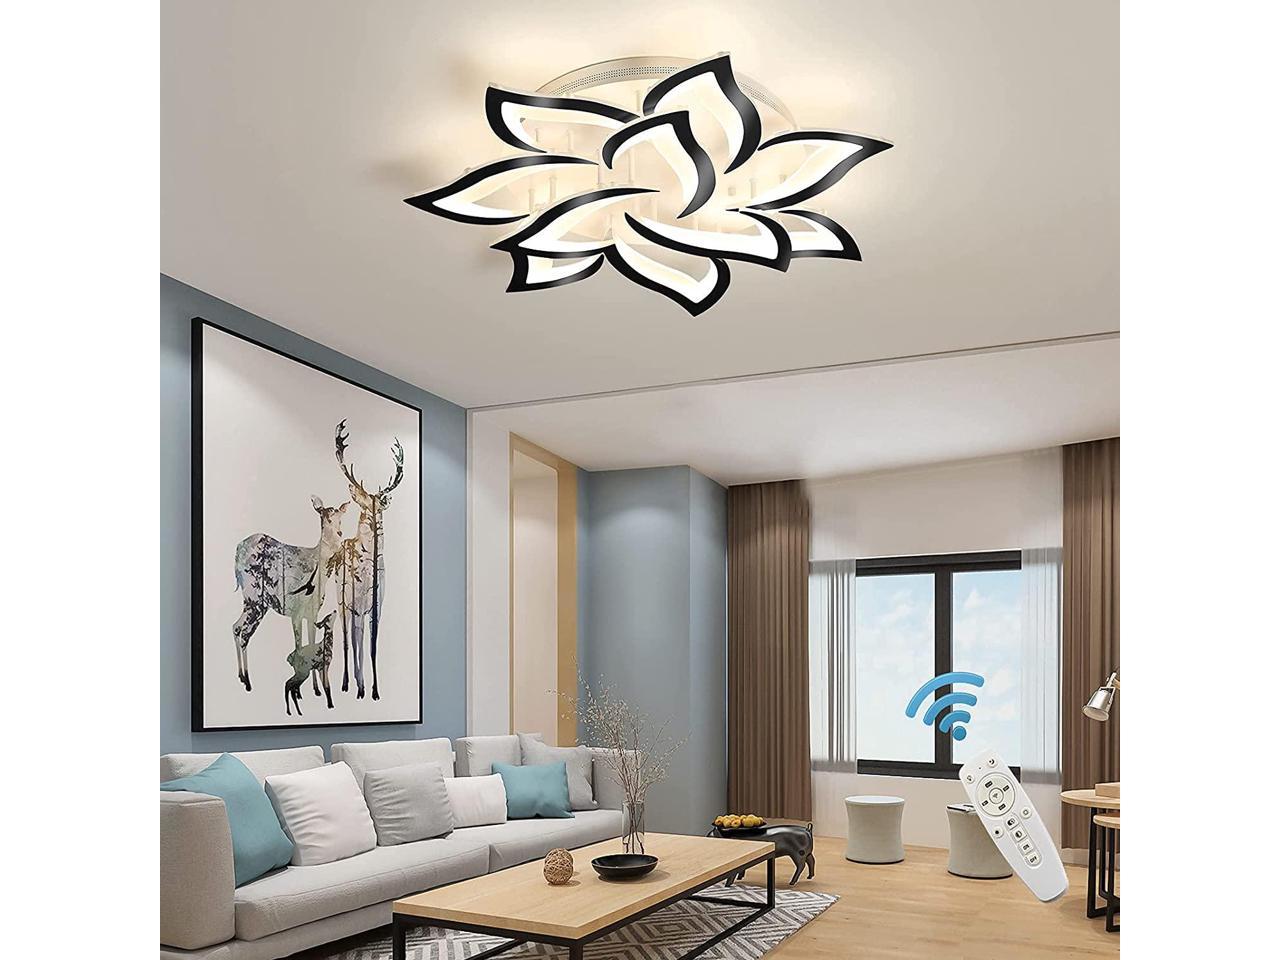 Acrylic LED Ceiling Living Room Bedroom Home Modern Chandelier Lamp Fixtures 